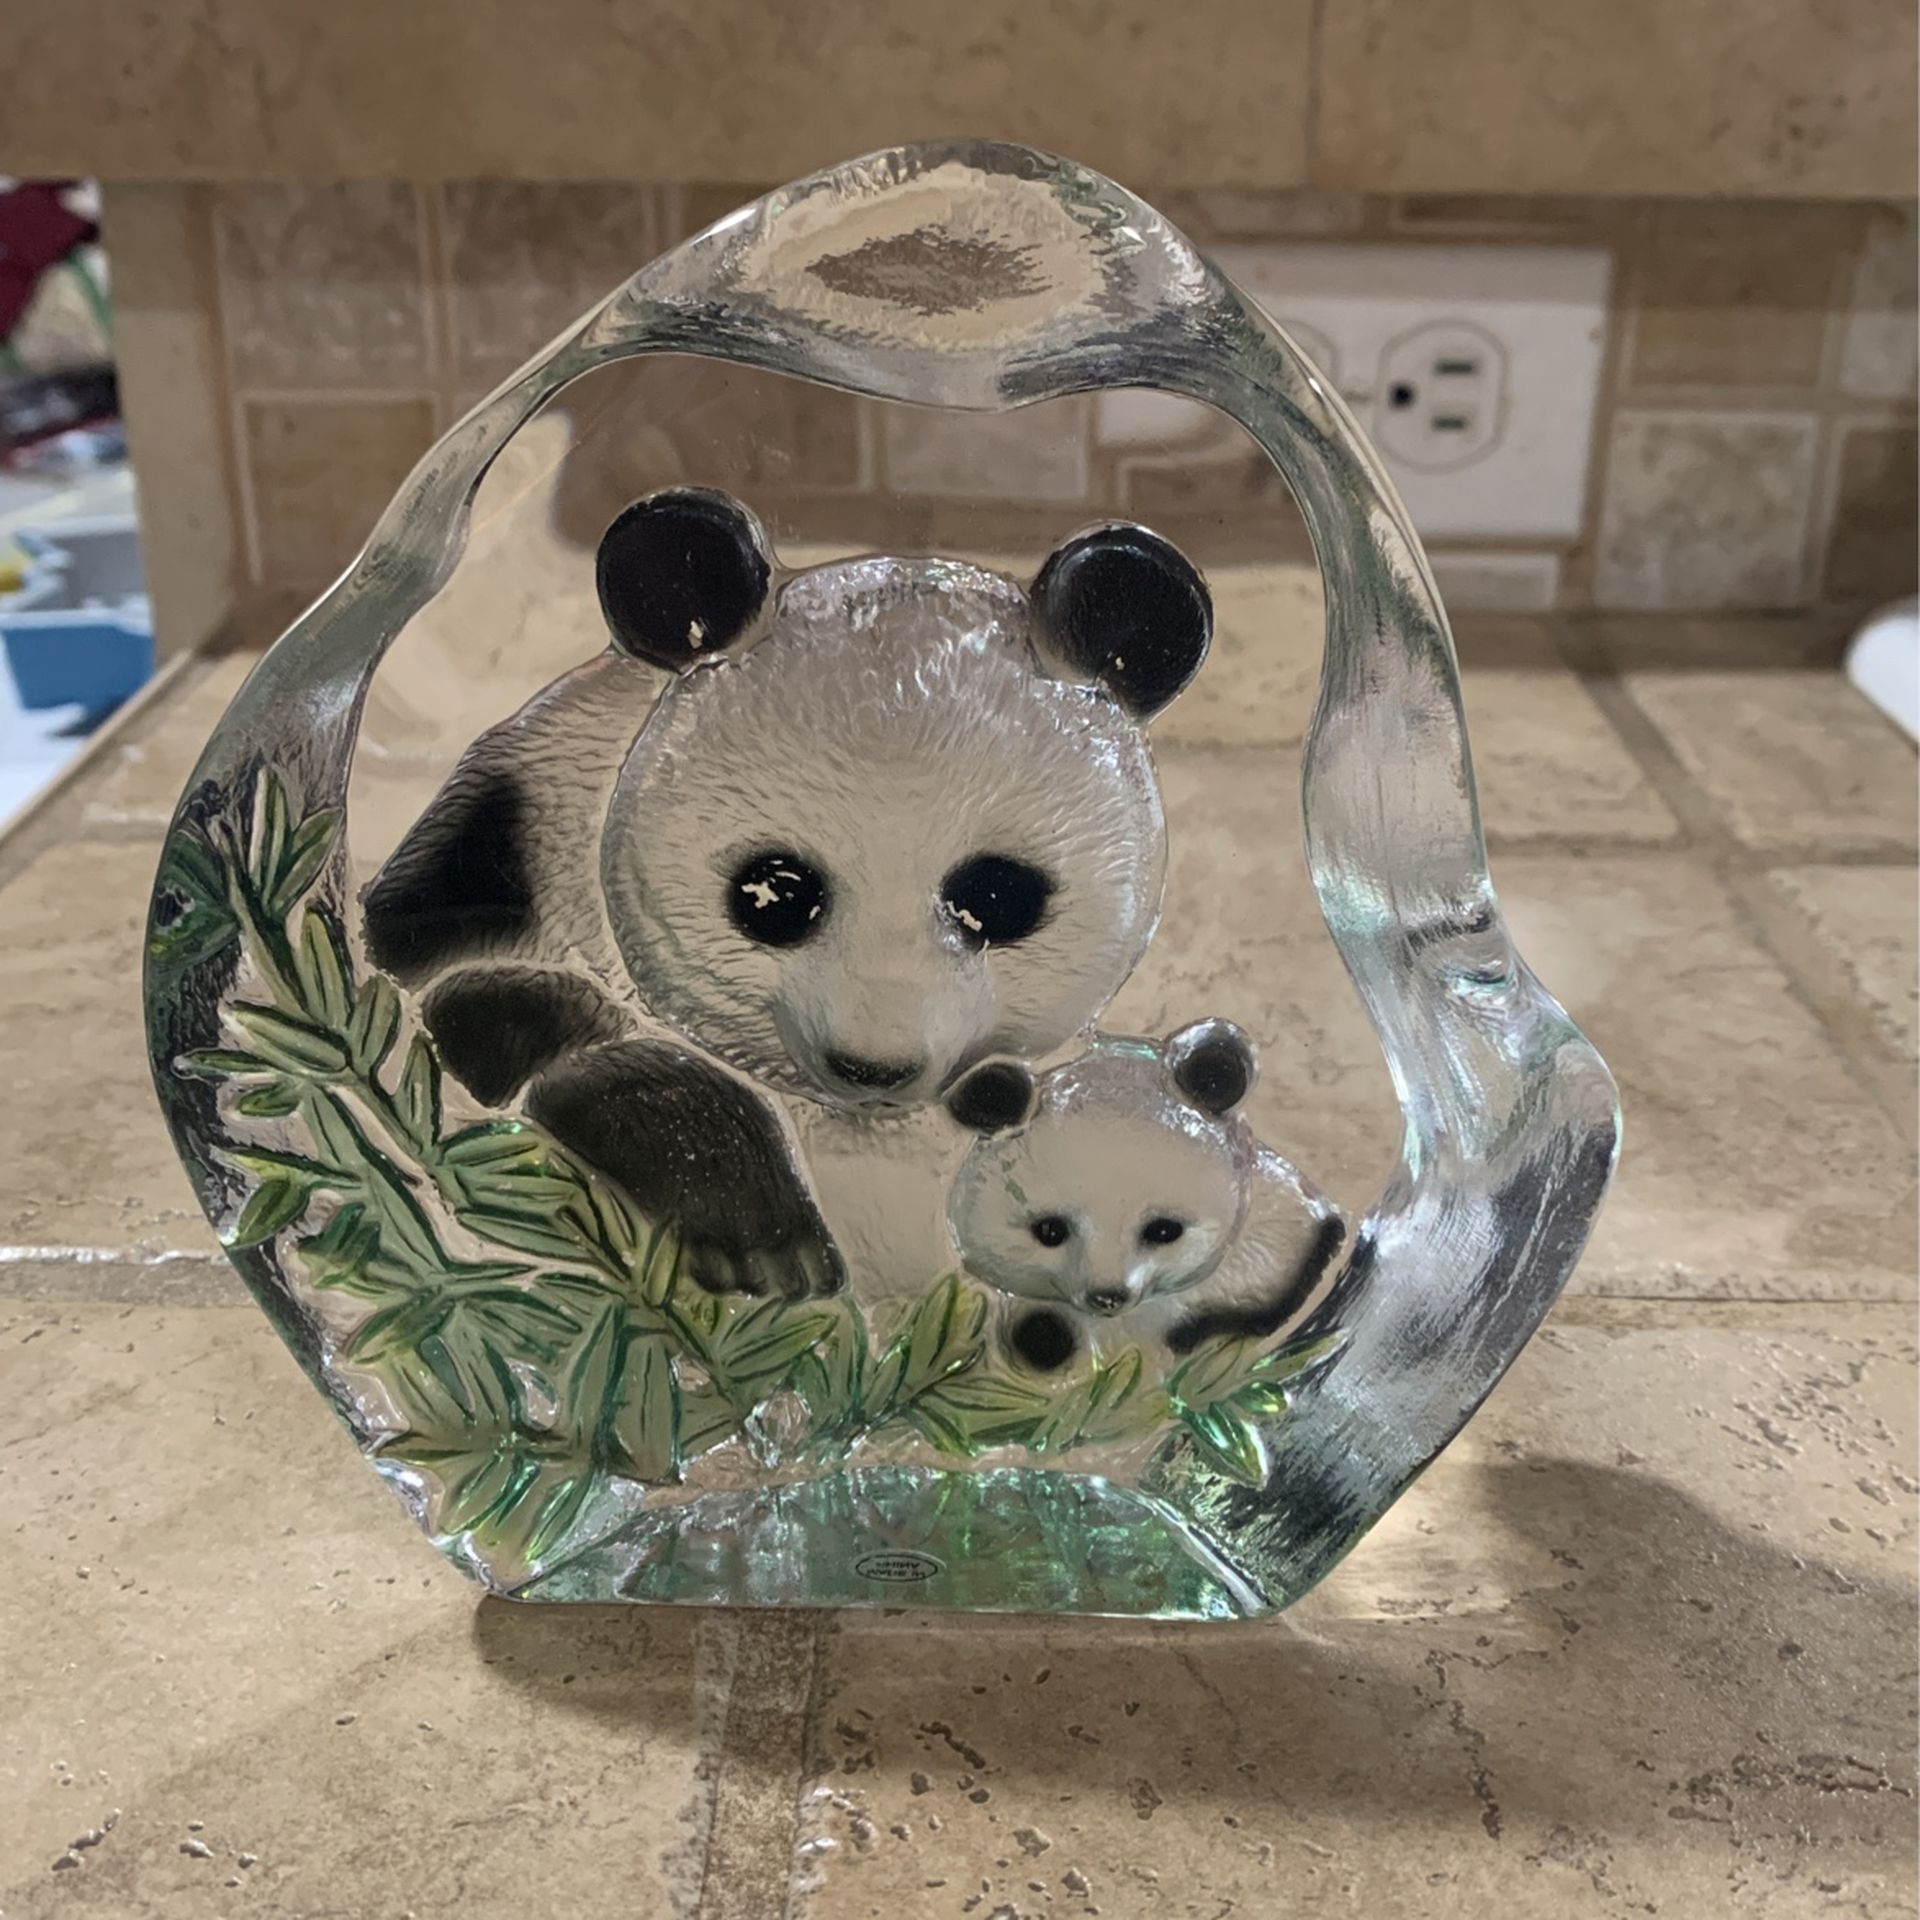 ART GLASS MOM CUB PANDA BEAR 🐼 PAPERWEIGHT SCULPTURE FIGURINE 4" TALL VINTAGE